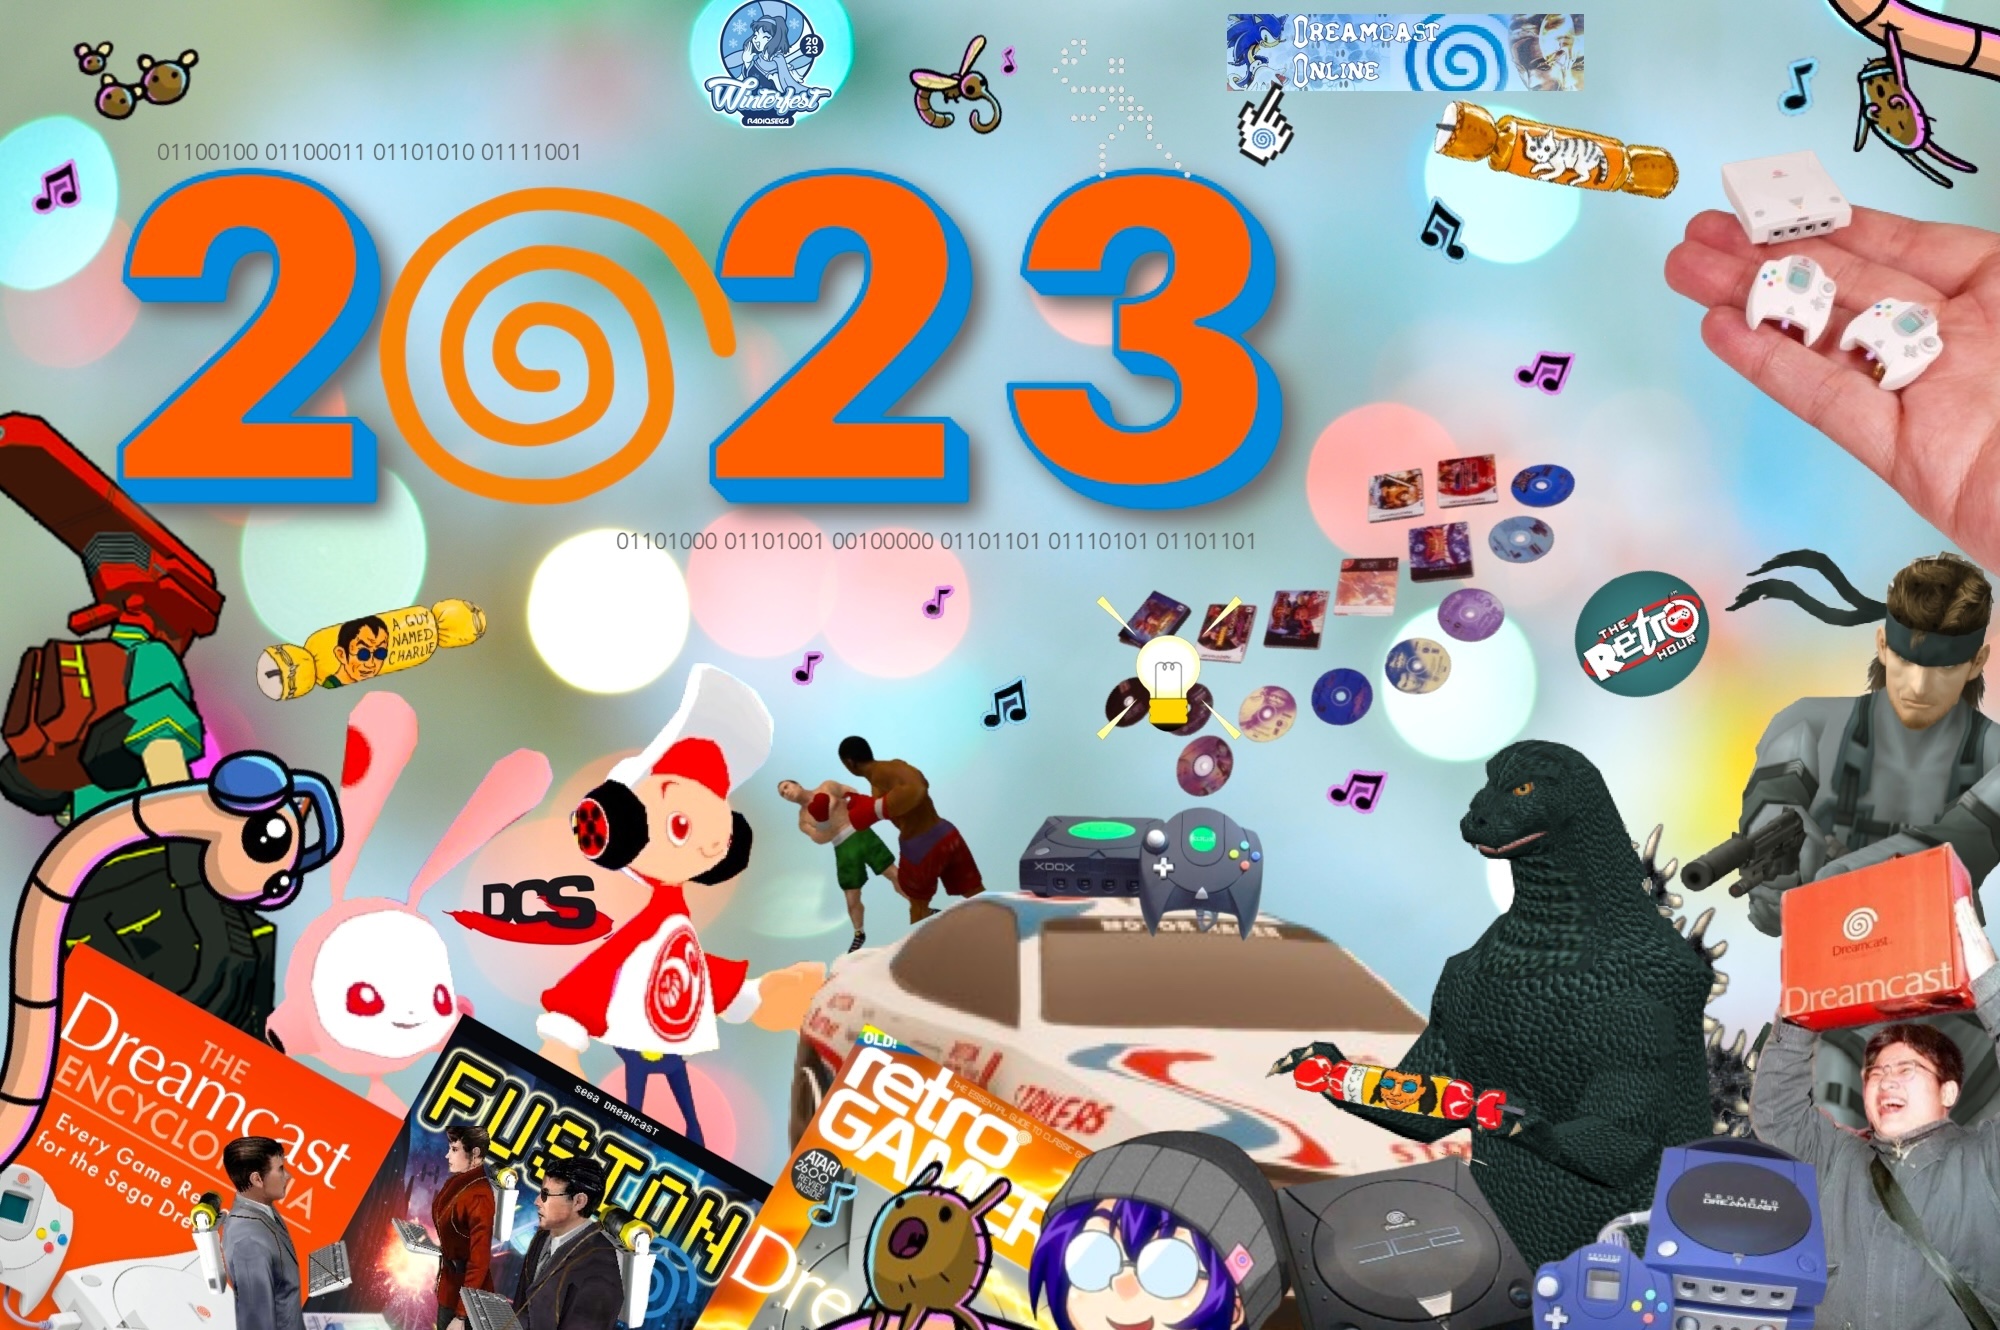 The Dreamcast Junkyard: 2023